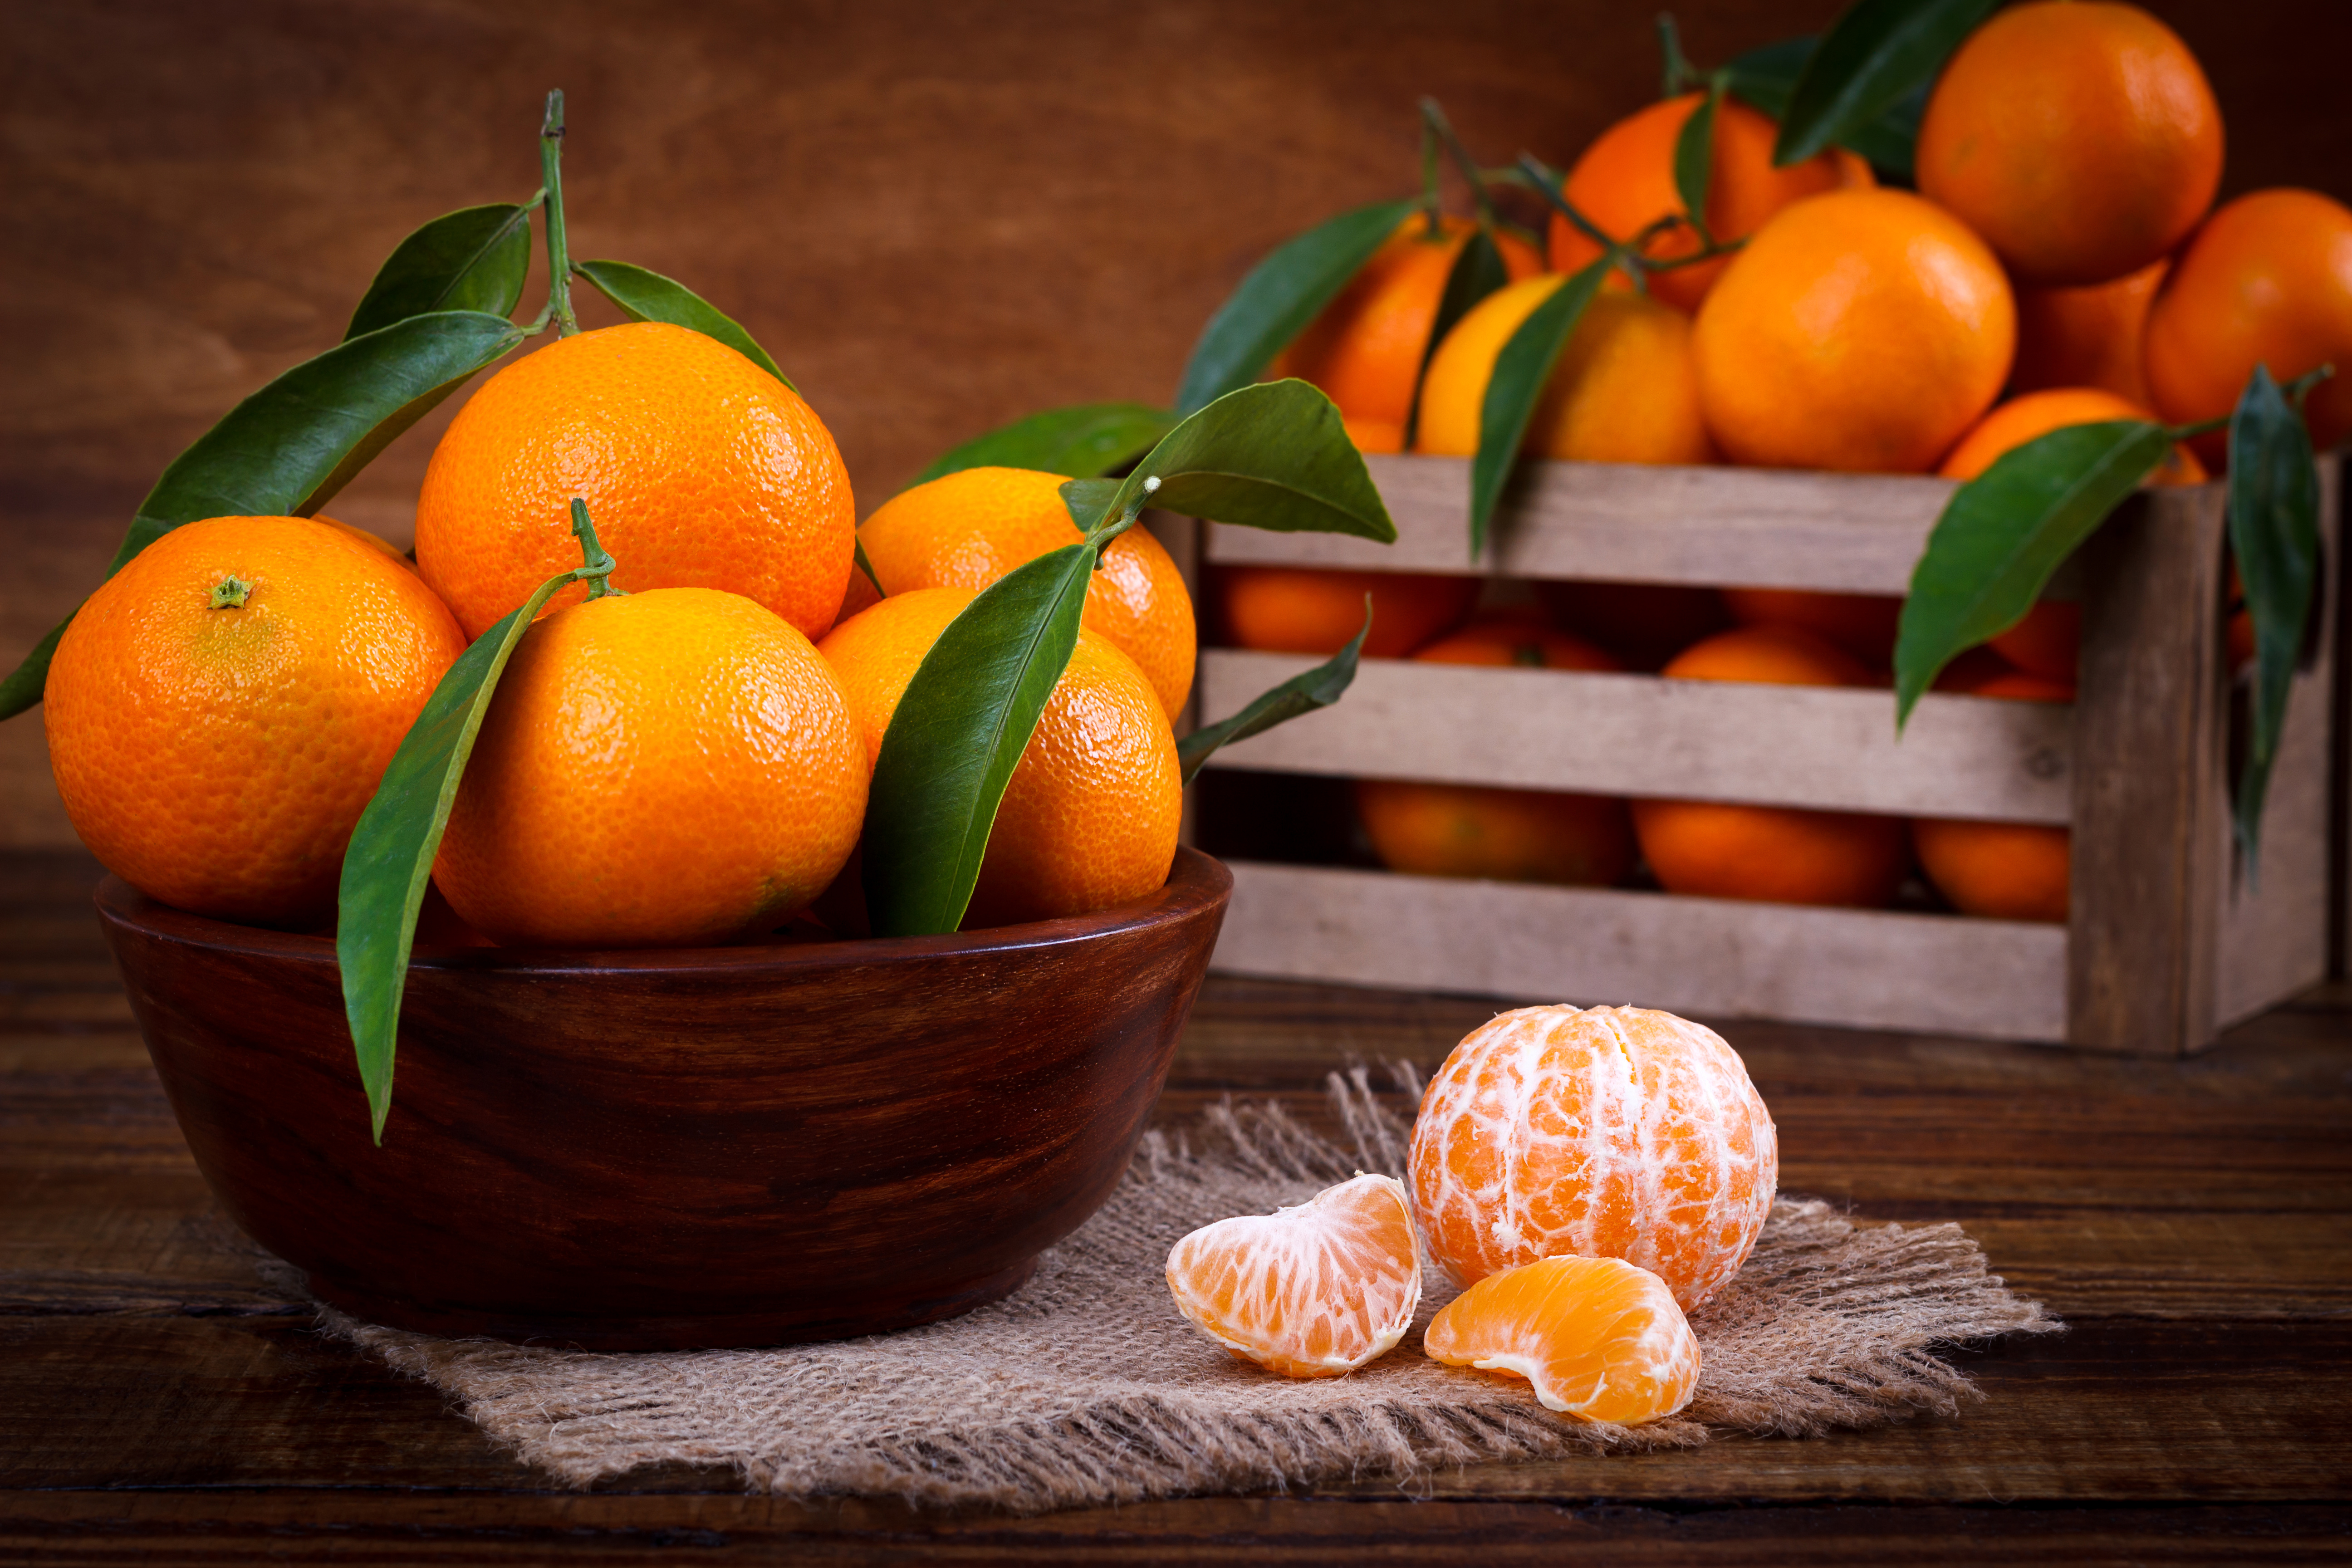 406013 descargar imagen alimento, mandarina, fruta, bodegón, frutas: fondos de pantalla y protectores de pantalla gratis